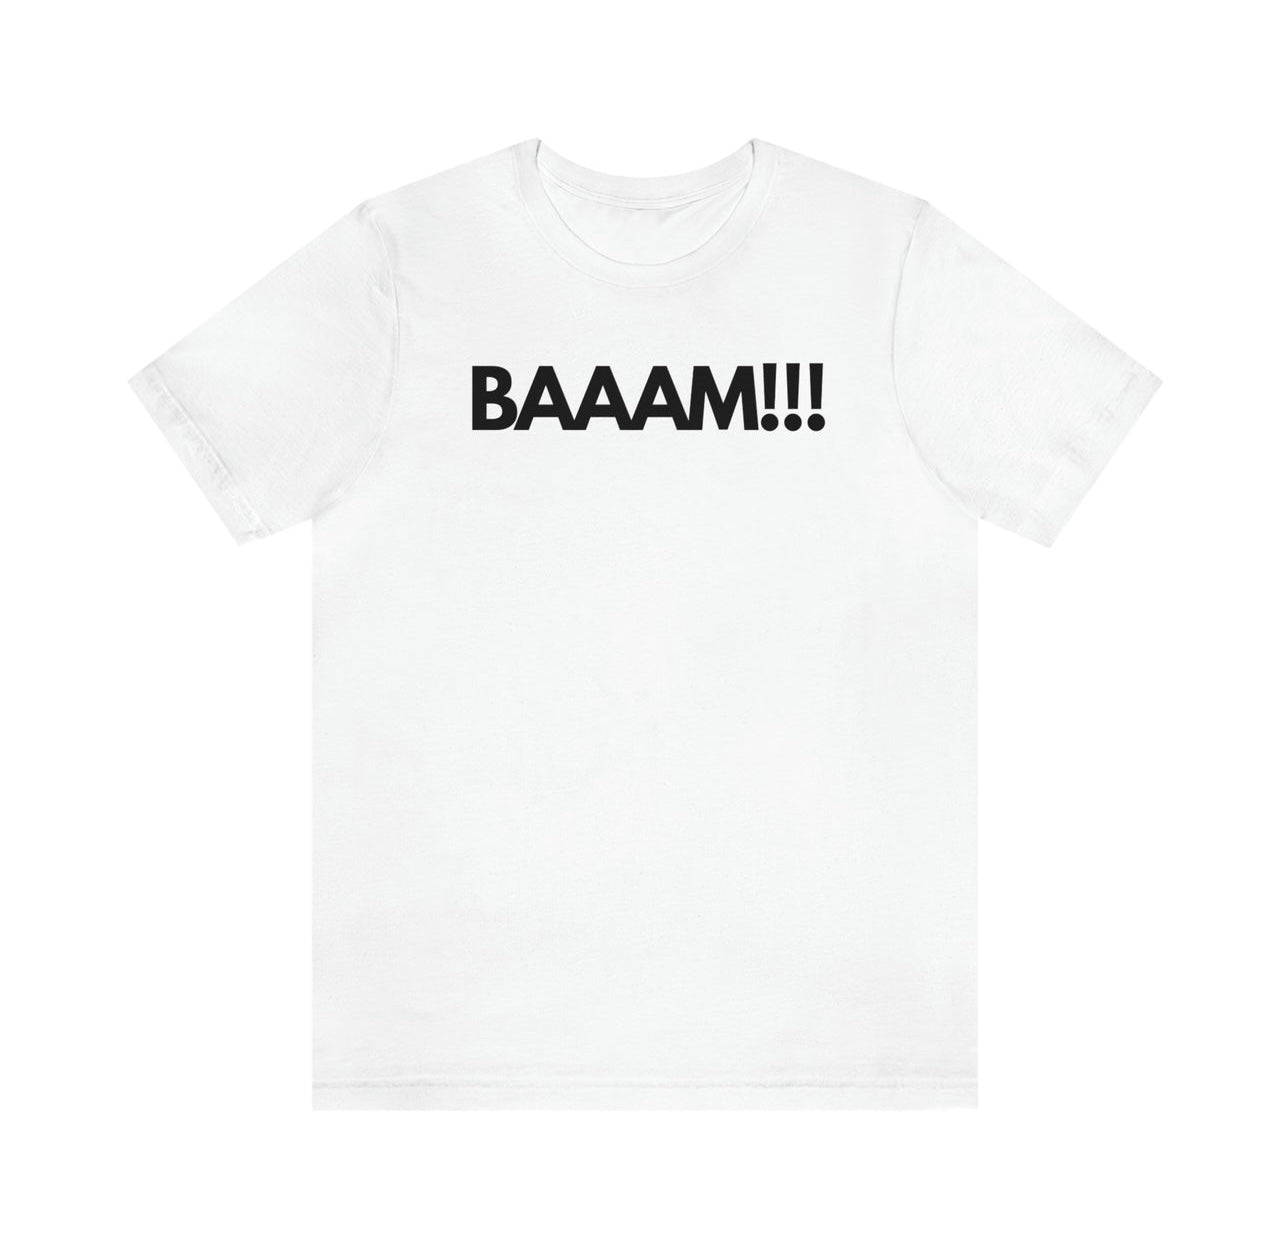 Free BAM T Shirt